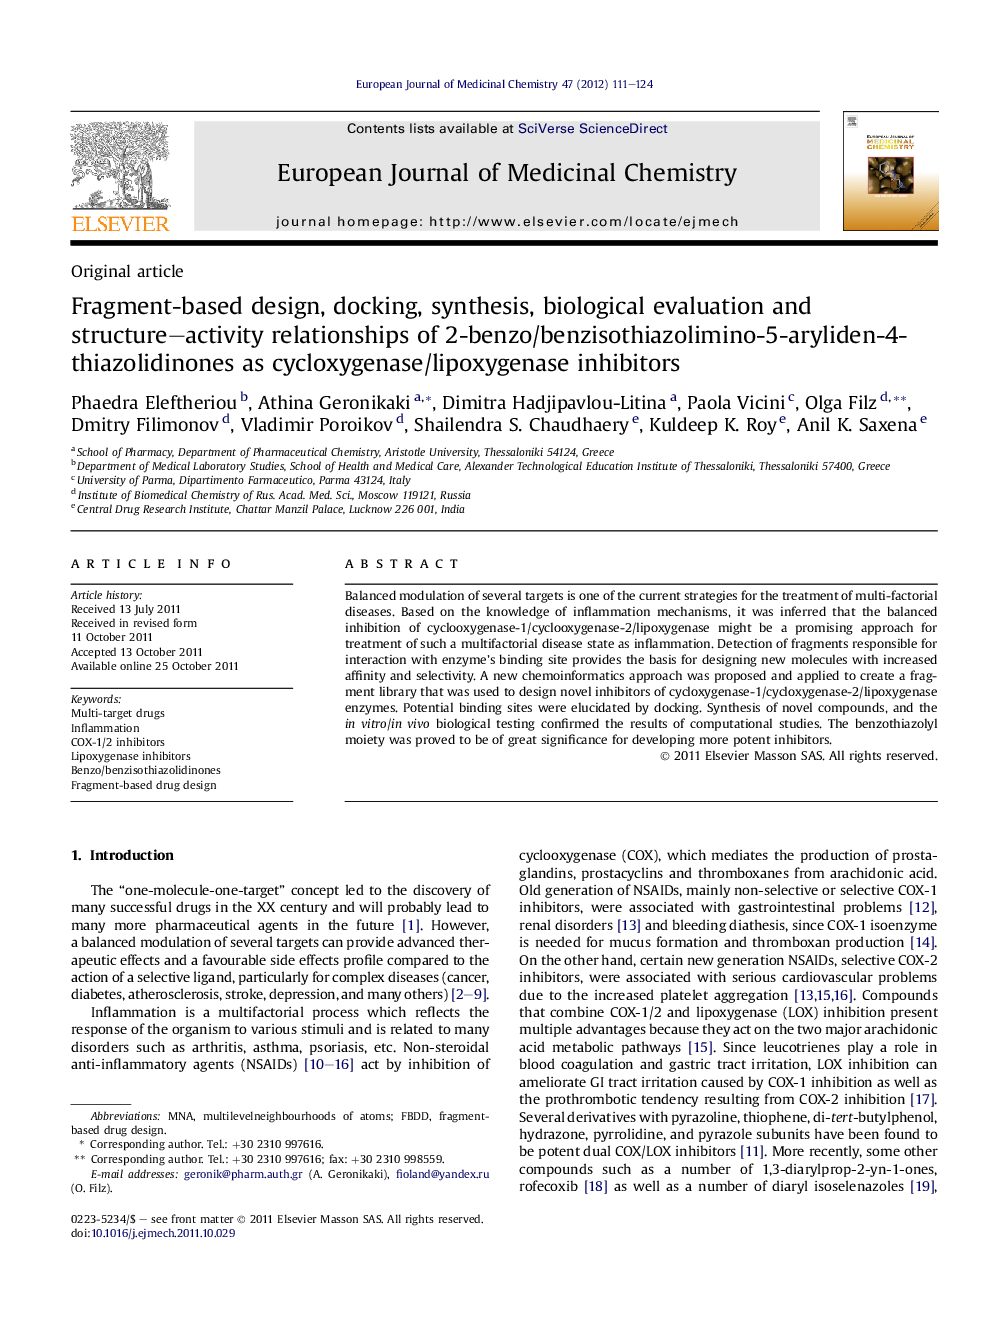 Fragment-based design, docking, synthesis, biological evaluation and structure–activity relationships of 2-benzo/benzisothiazolimino-5-aryliden-4-thiazolidinones as cycloxygenase/lipoxygenase inhibitors